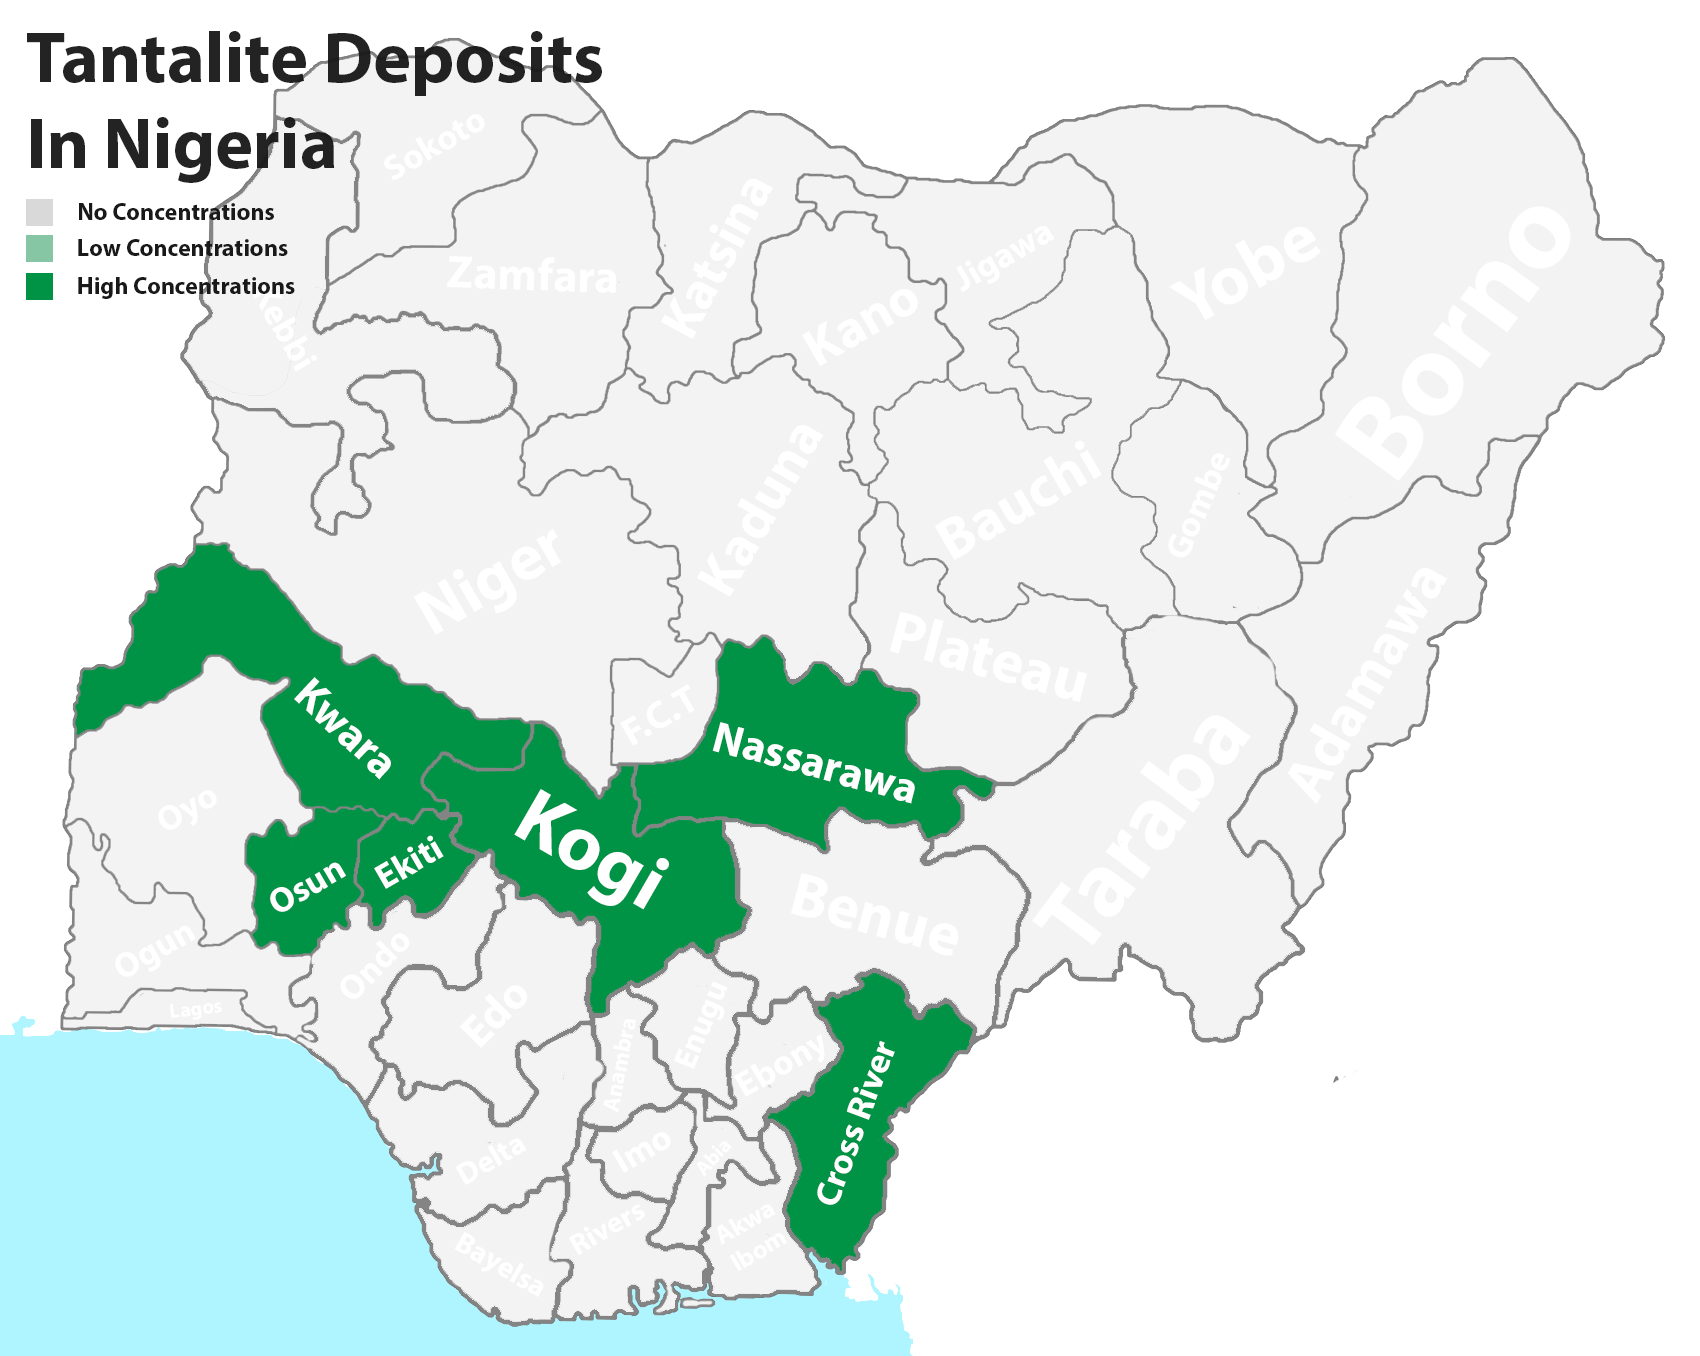 Tantalite deposits in Nigeria